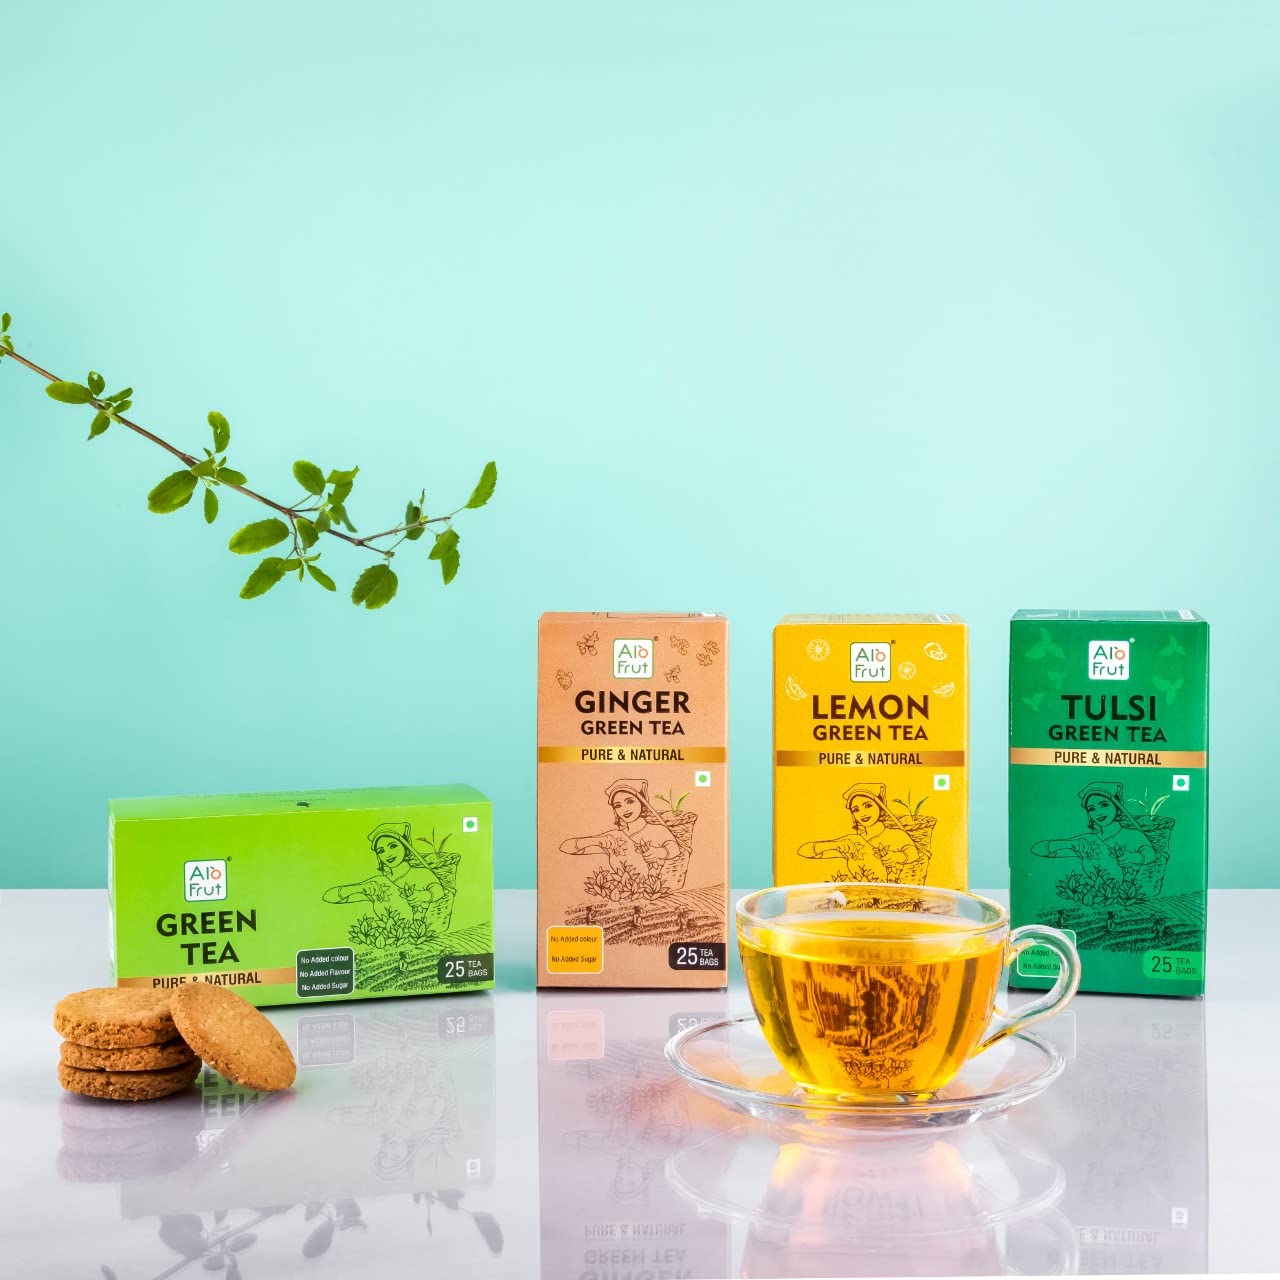 Alo Frut Tulsi Green Tea Pure & natural 25 Tea Bags Pack of (3)